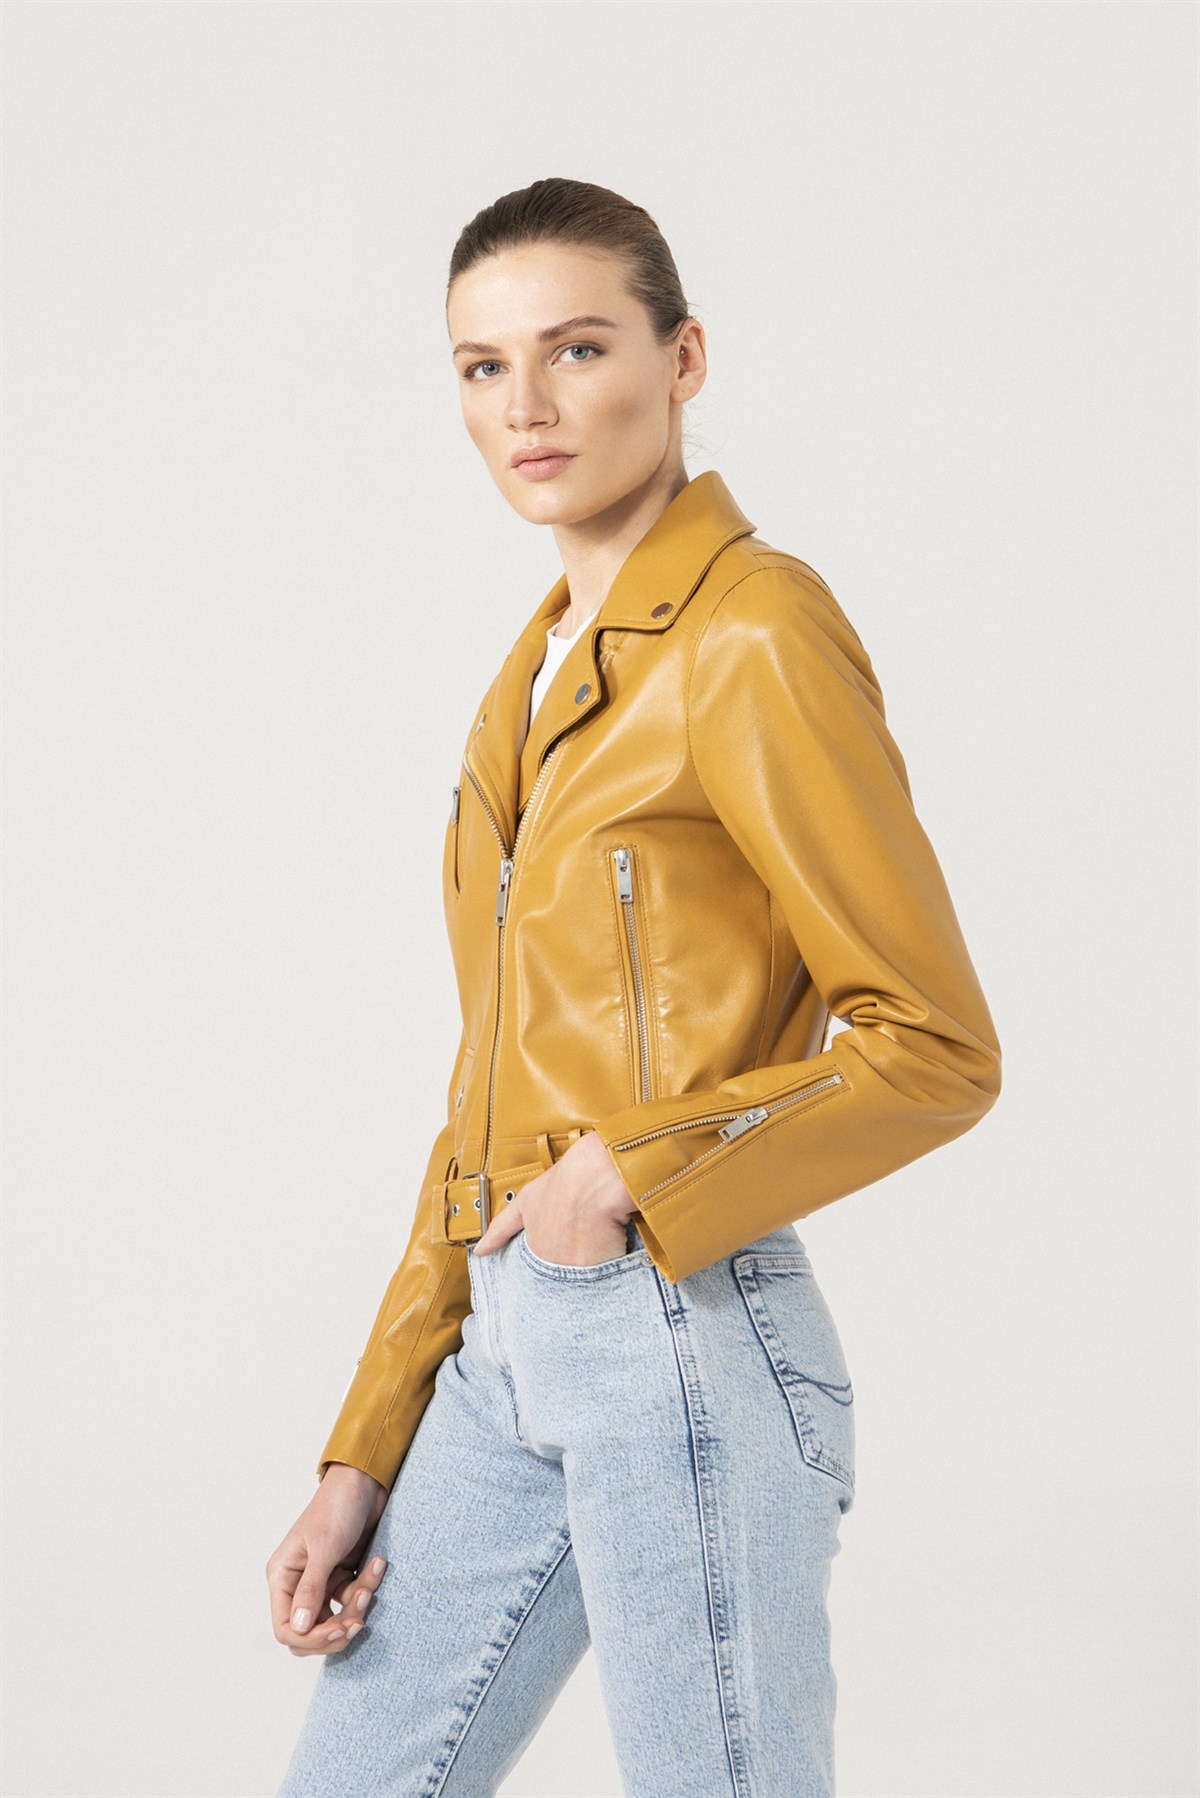 Cindy Women Biker Yellow Leather Jacket | Women's Leather Jacket